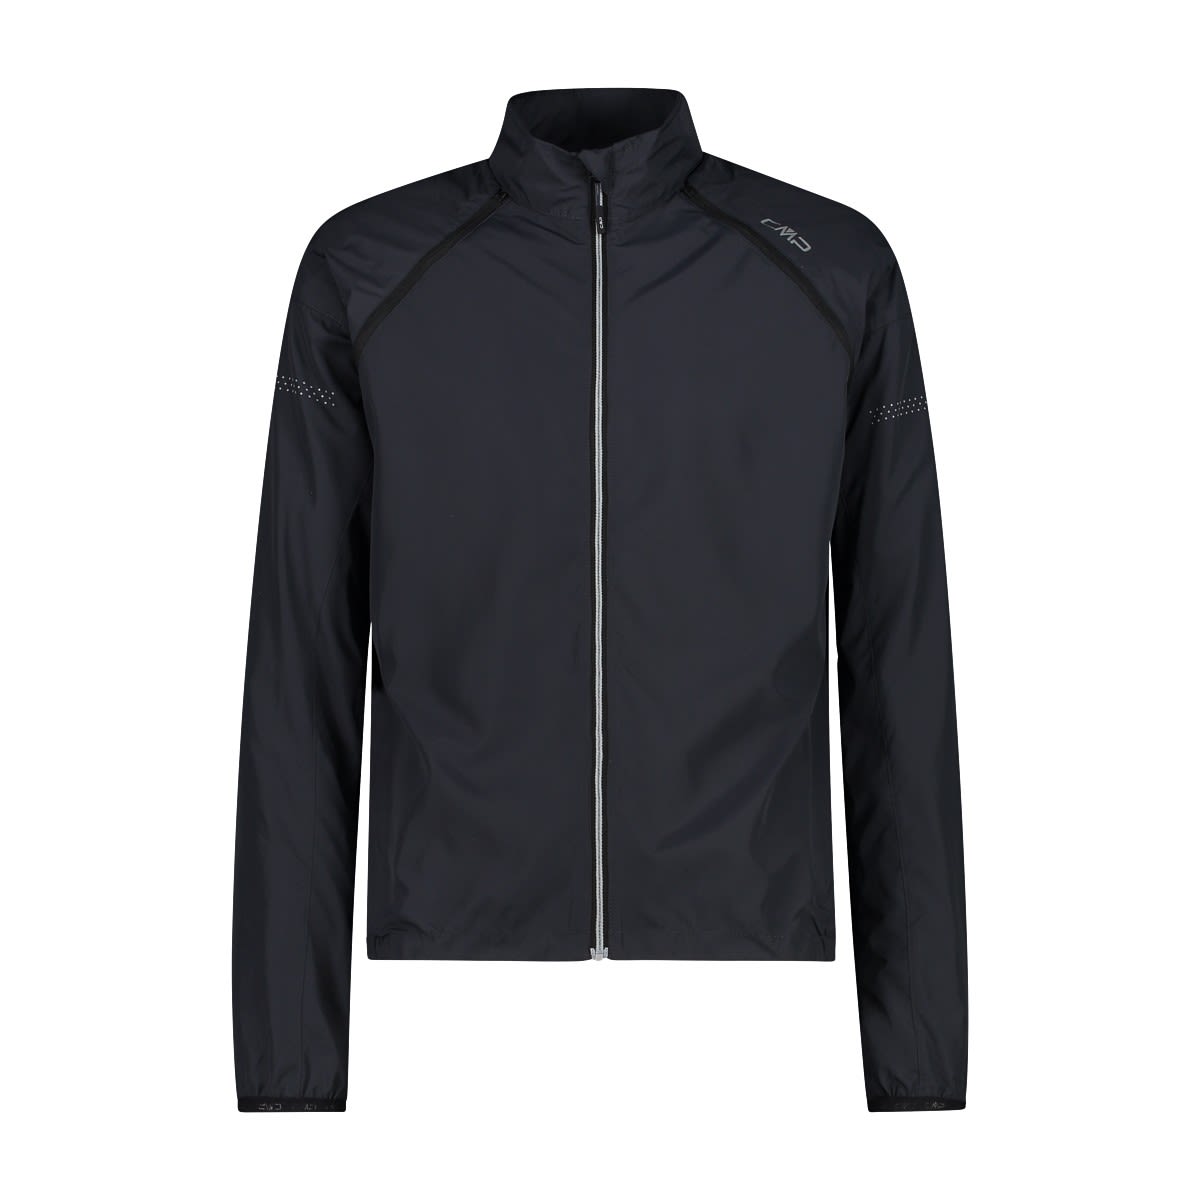 CMP Jacket Detachable Sleeves II Schwarz- Male Ponchos und Capes- Grsse 46 - Farbe Anthracite unter CMP